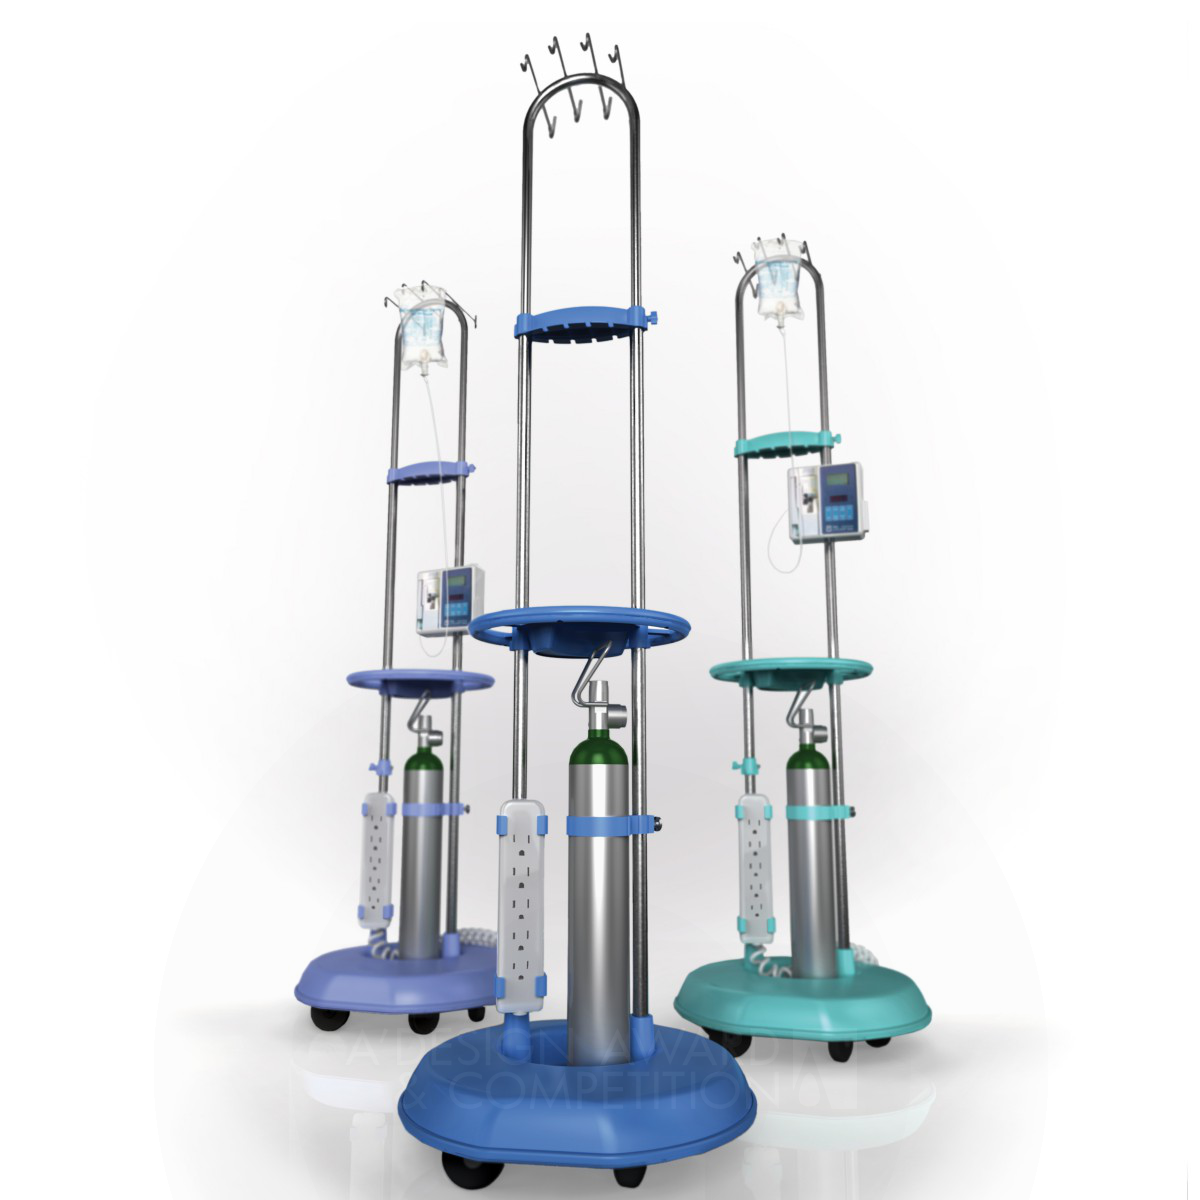 Safepole Hospital IV Pole by TEAMS Design